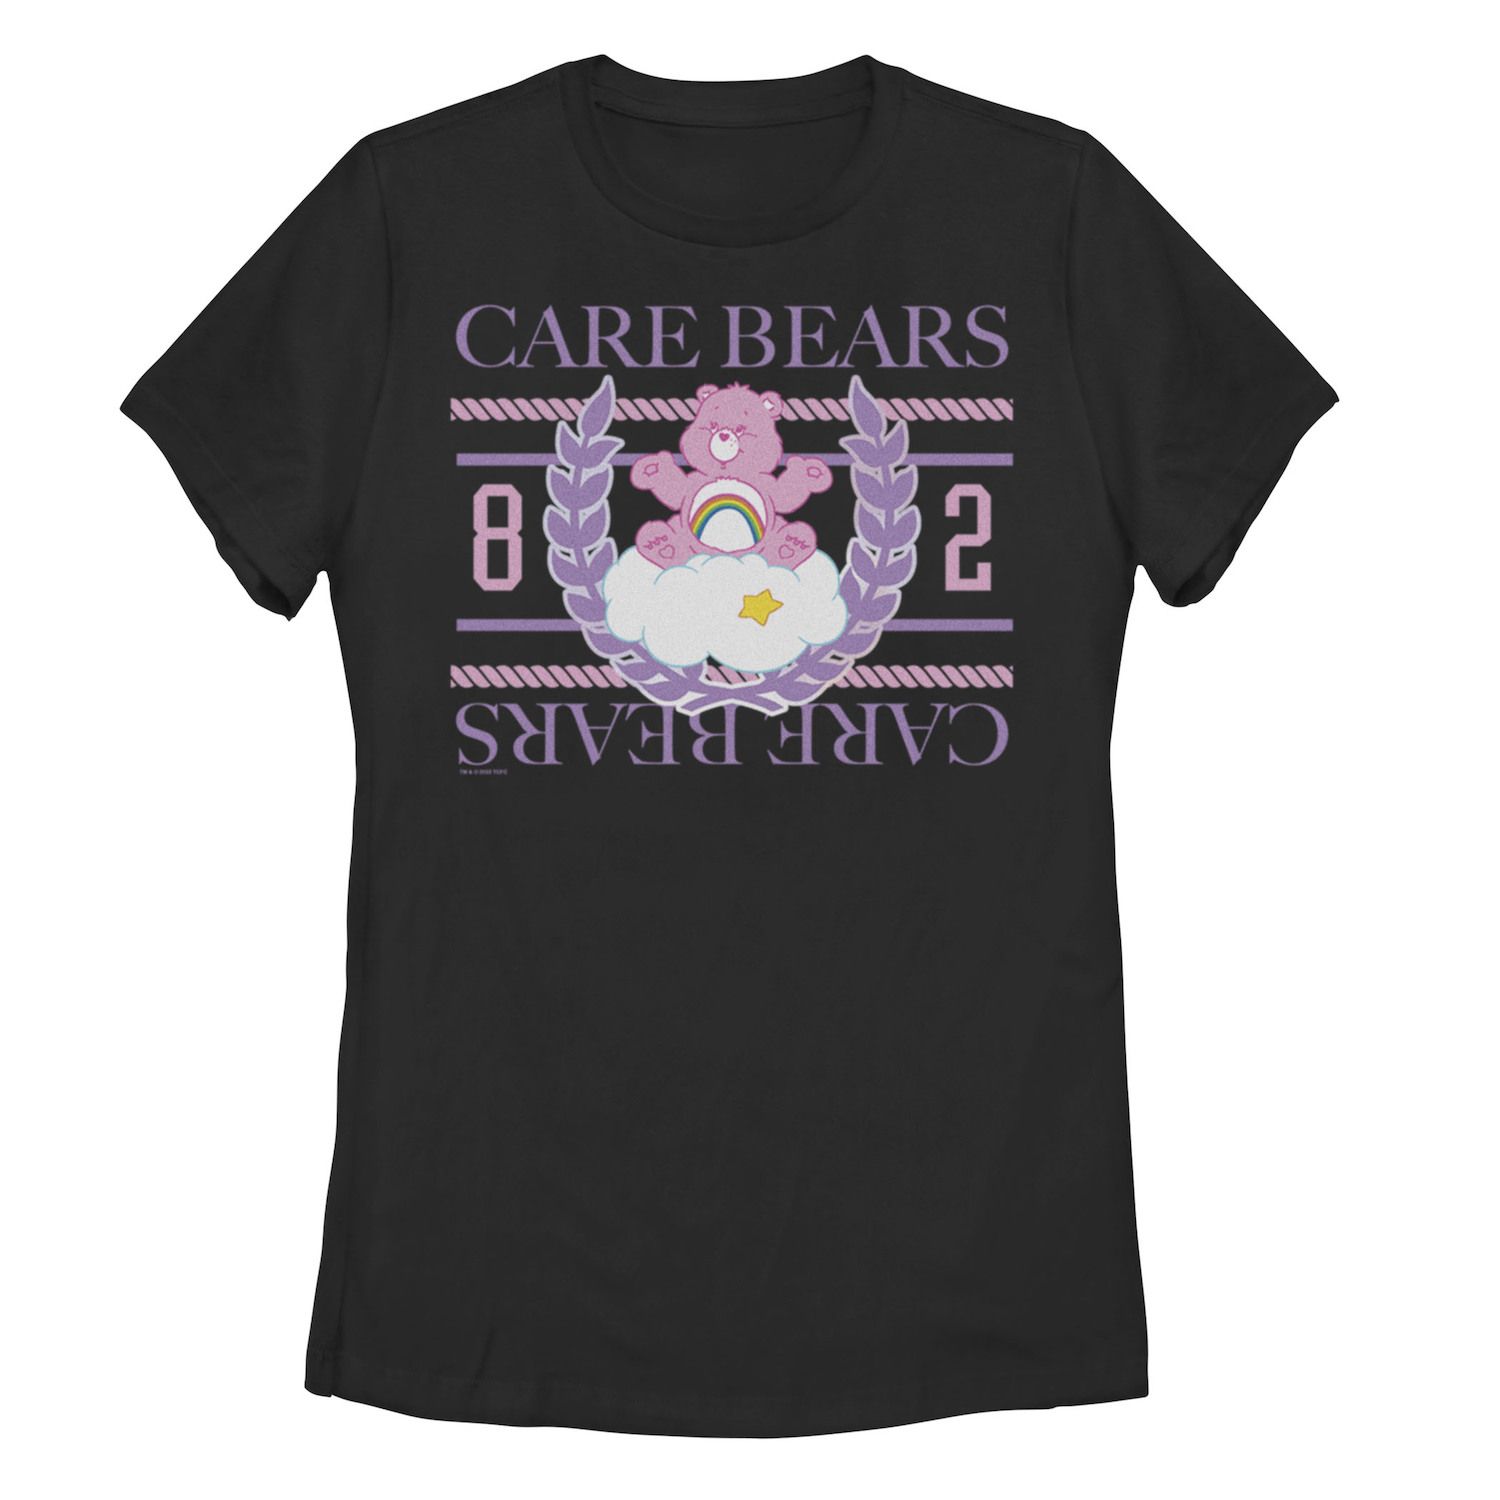 Футболка с рисунком Care Bears для юниоров Cheer Bear Care Bears 82 Licensed Character